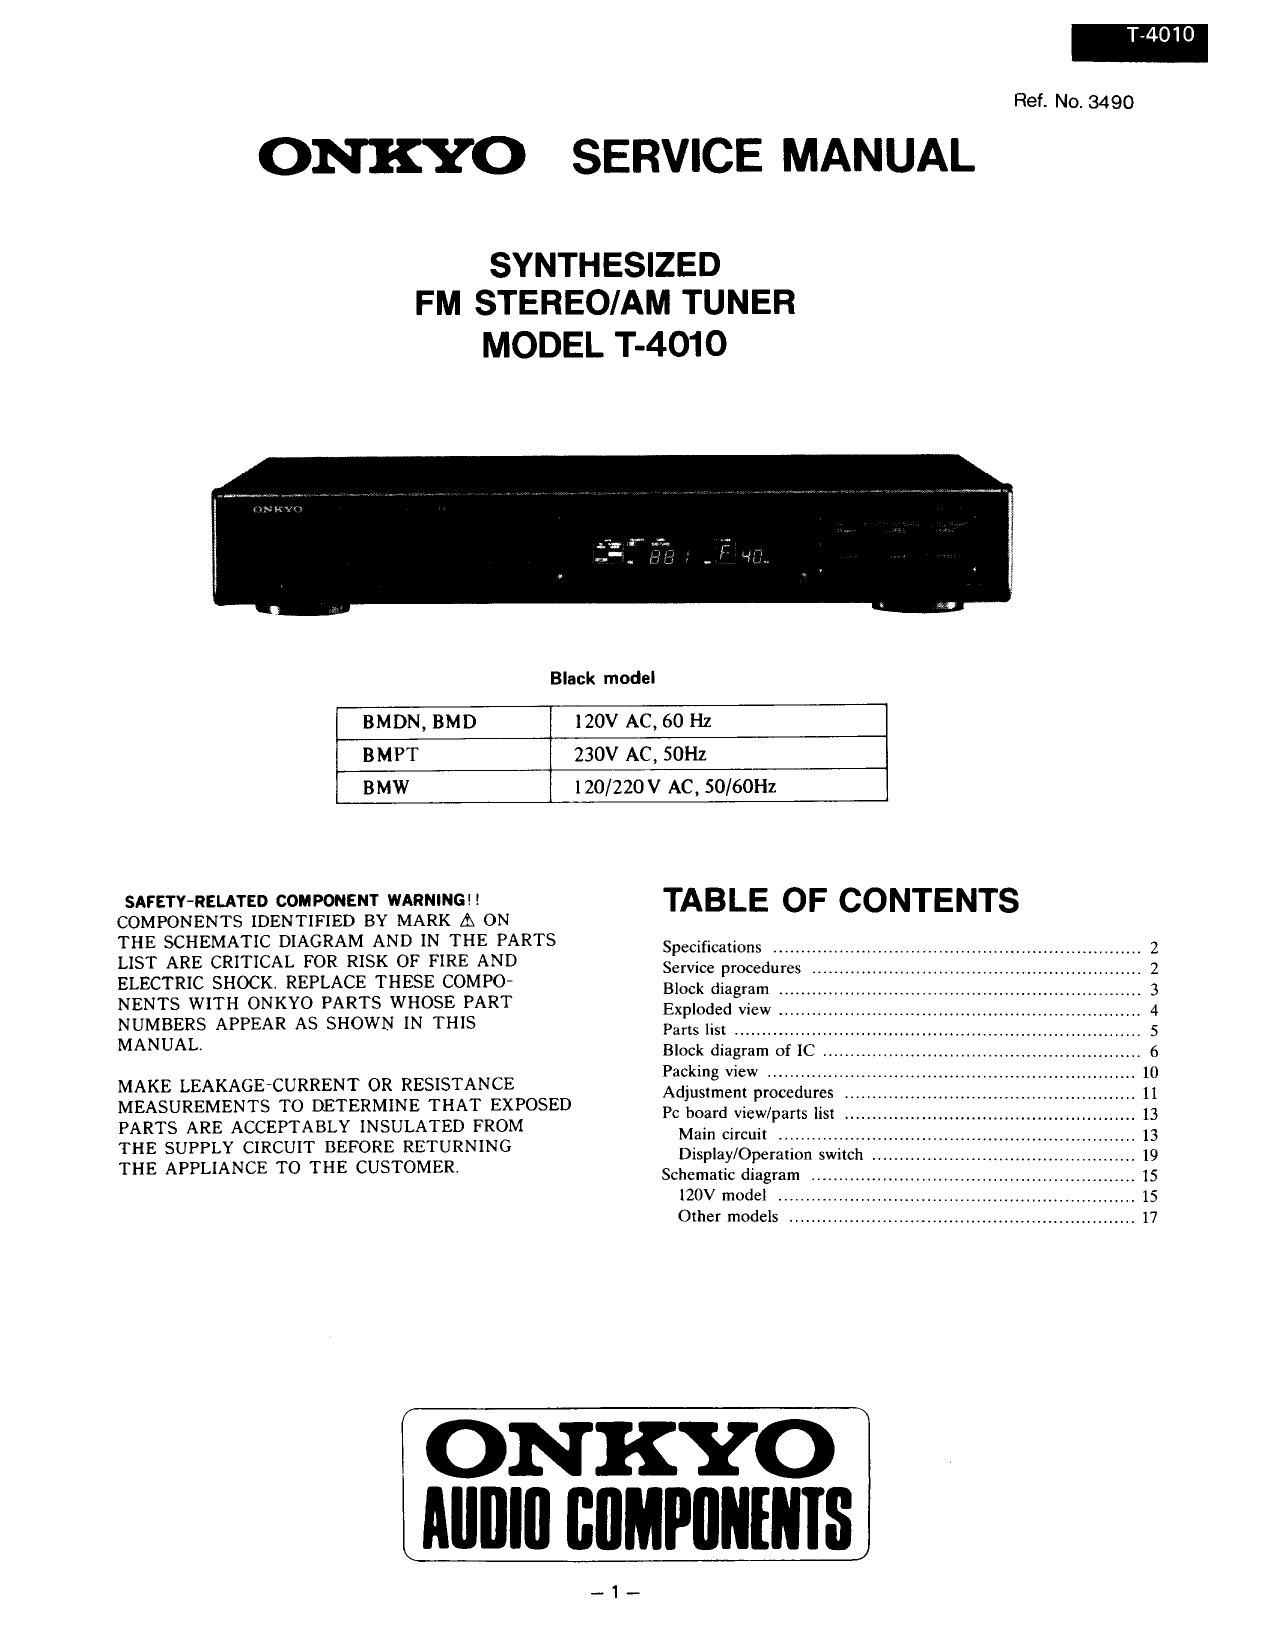 Onkyo T 4010 Service Manual